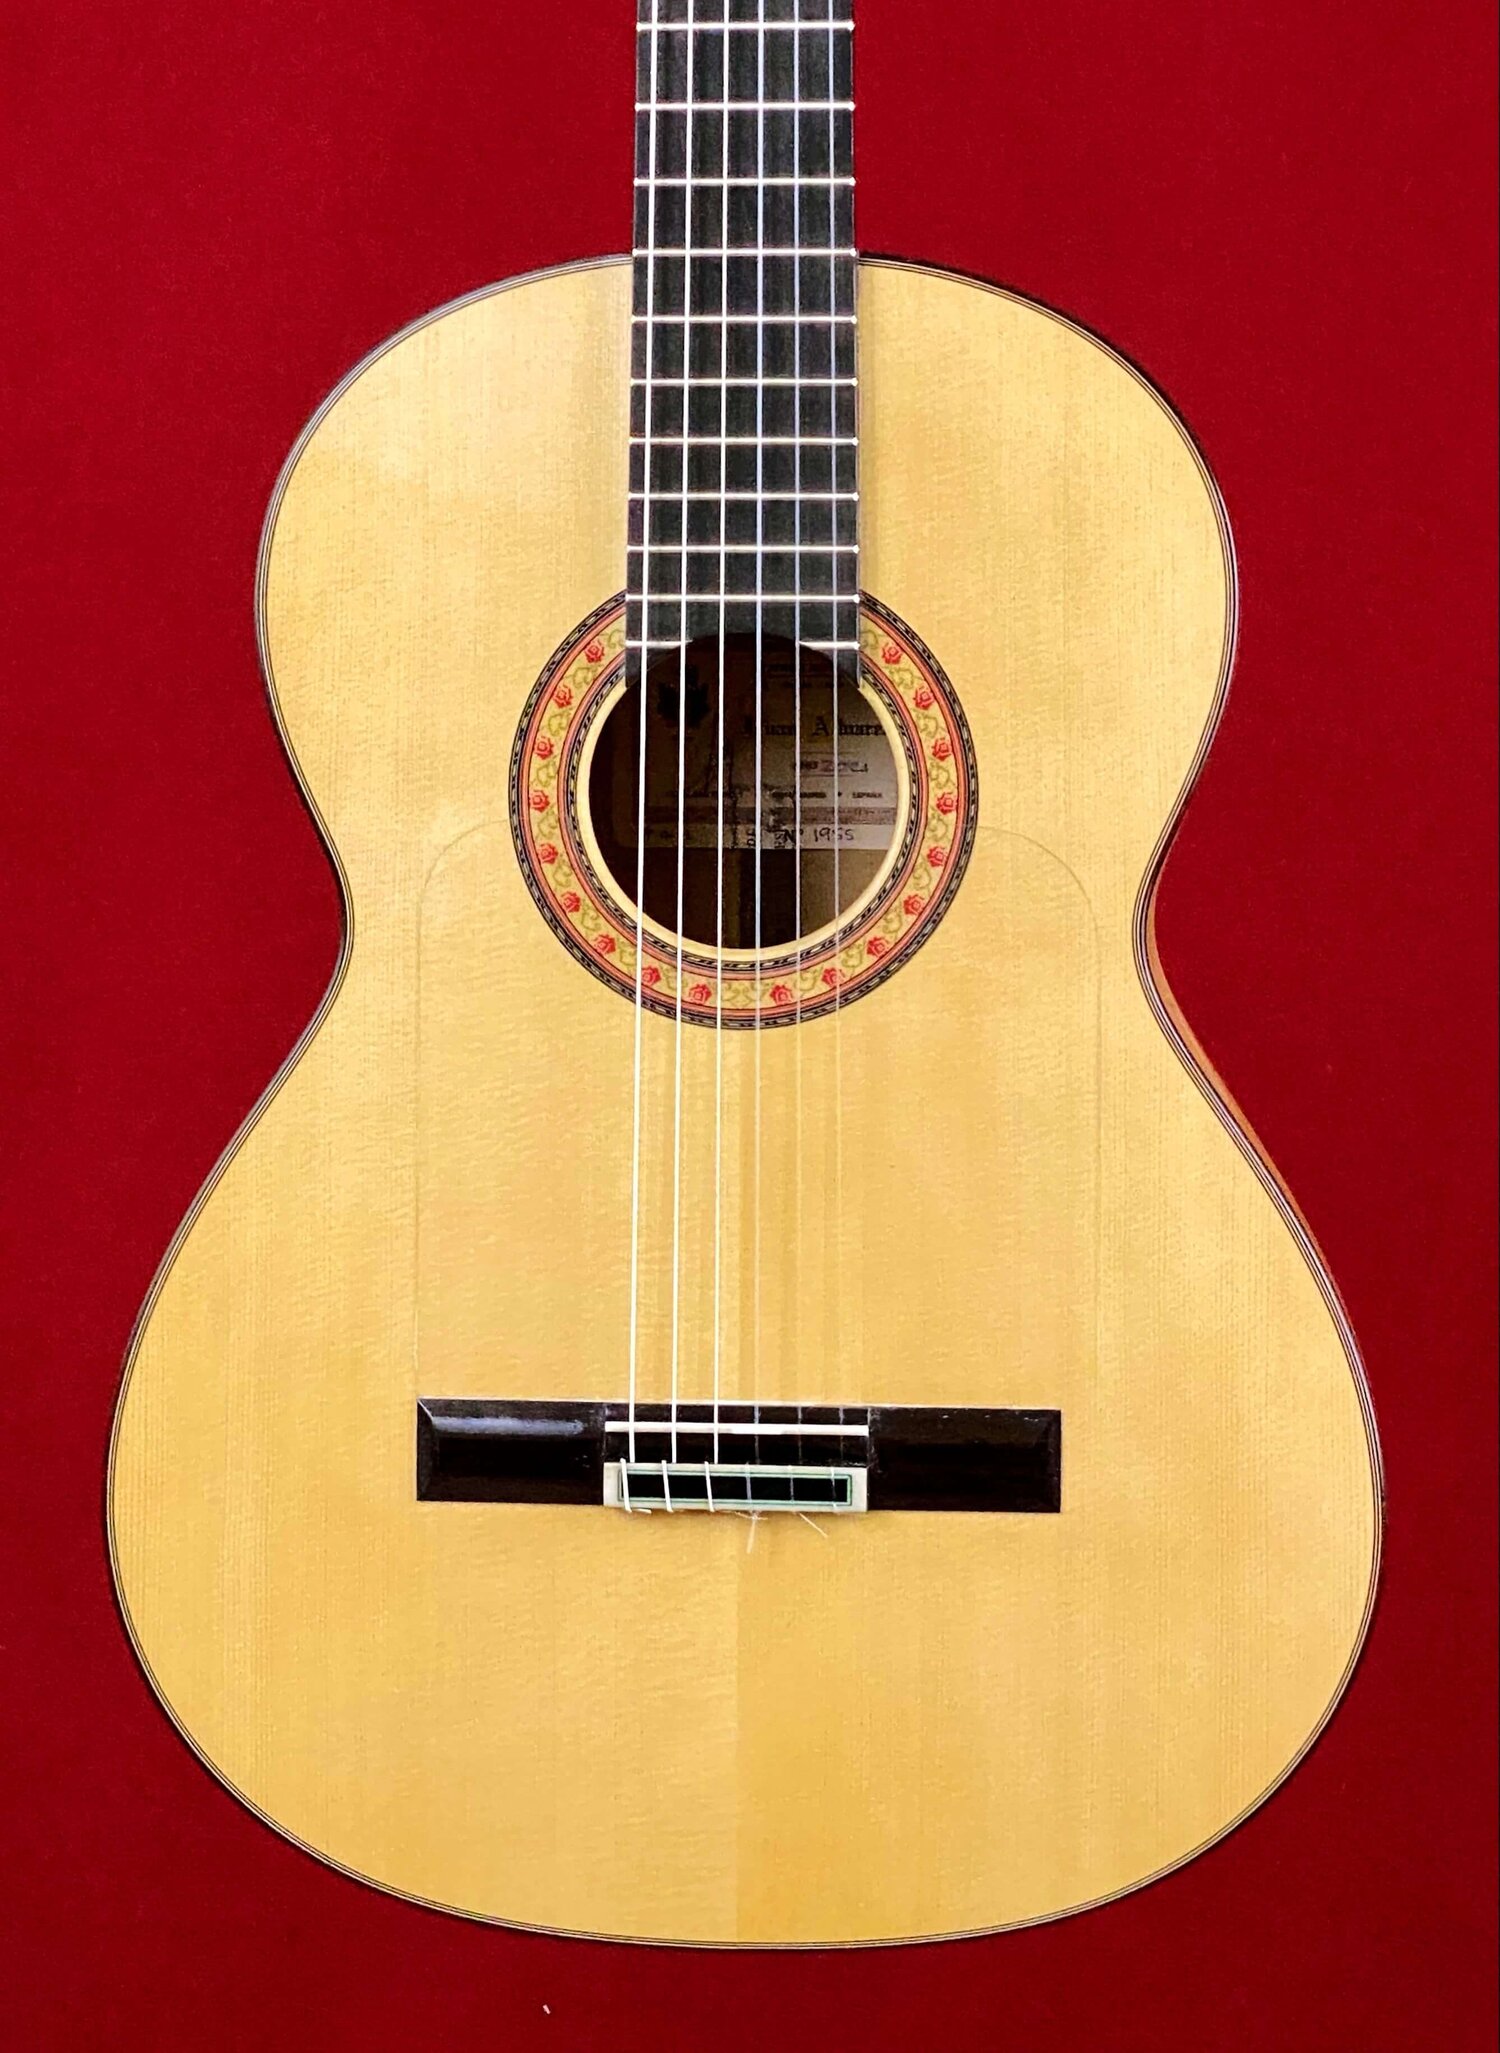 Kolibrie Groene achtergrond leerboek 2021 Juan Alvarez Mod F-AV-1 Professional Flamenco Guitar